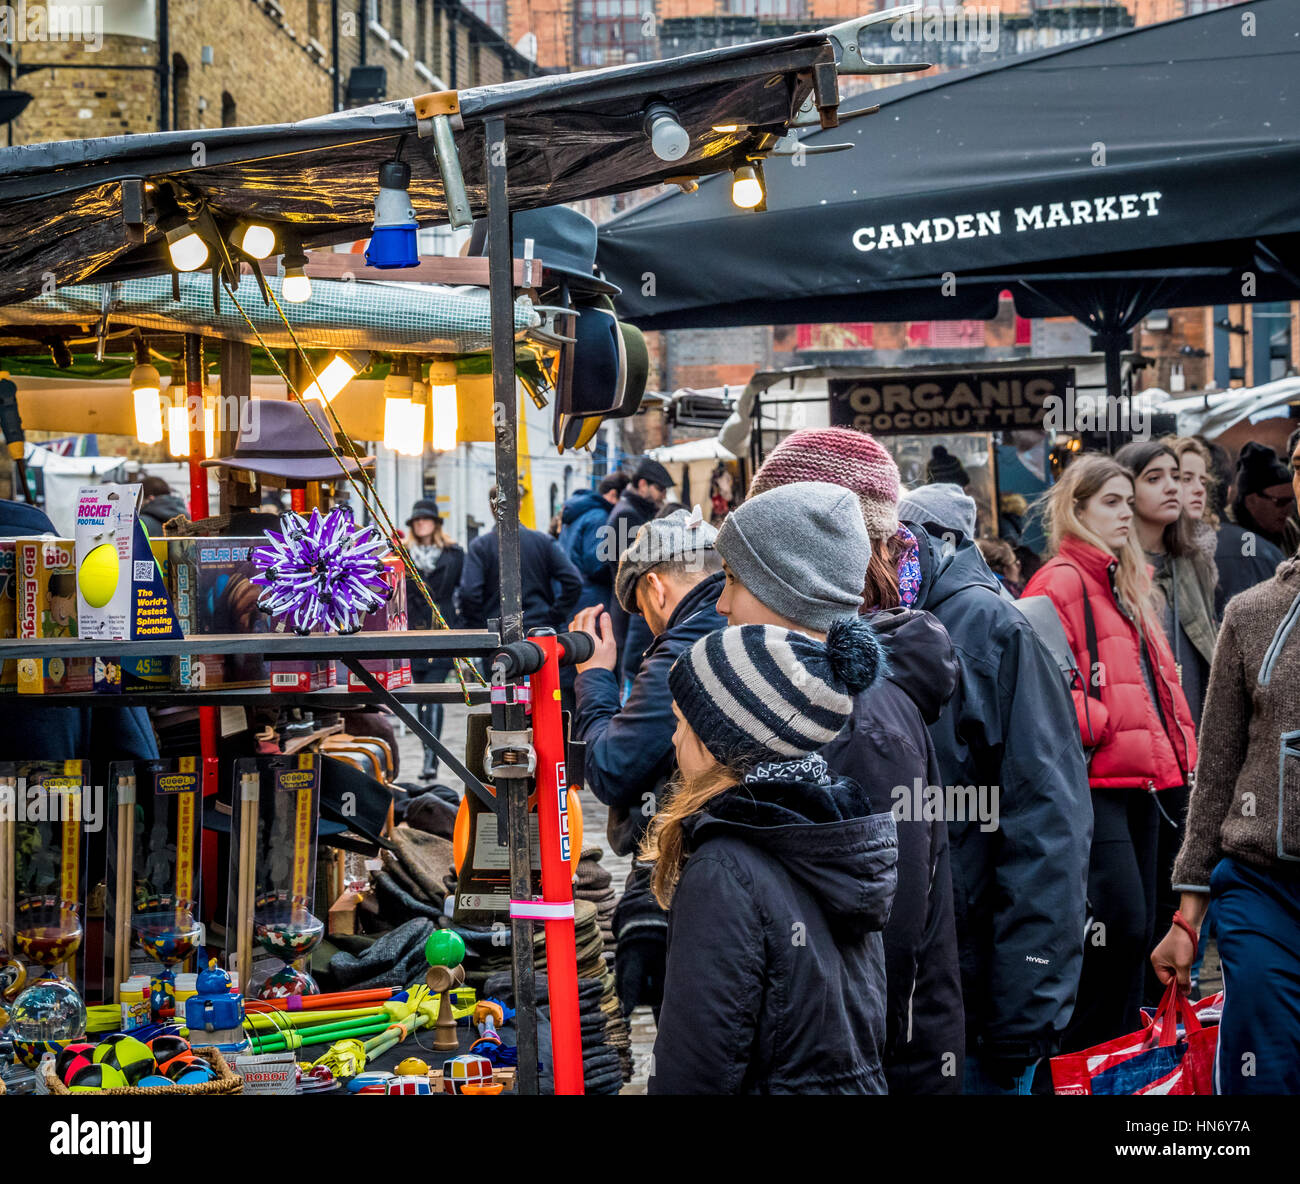 Shoppers in Camden market, London, UK. Stock Photo